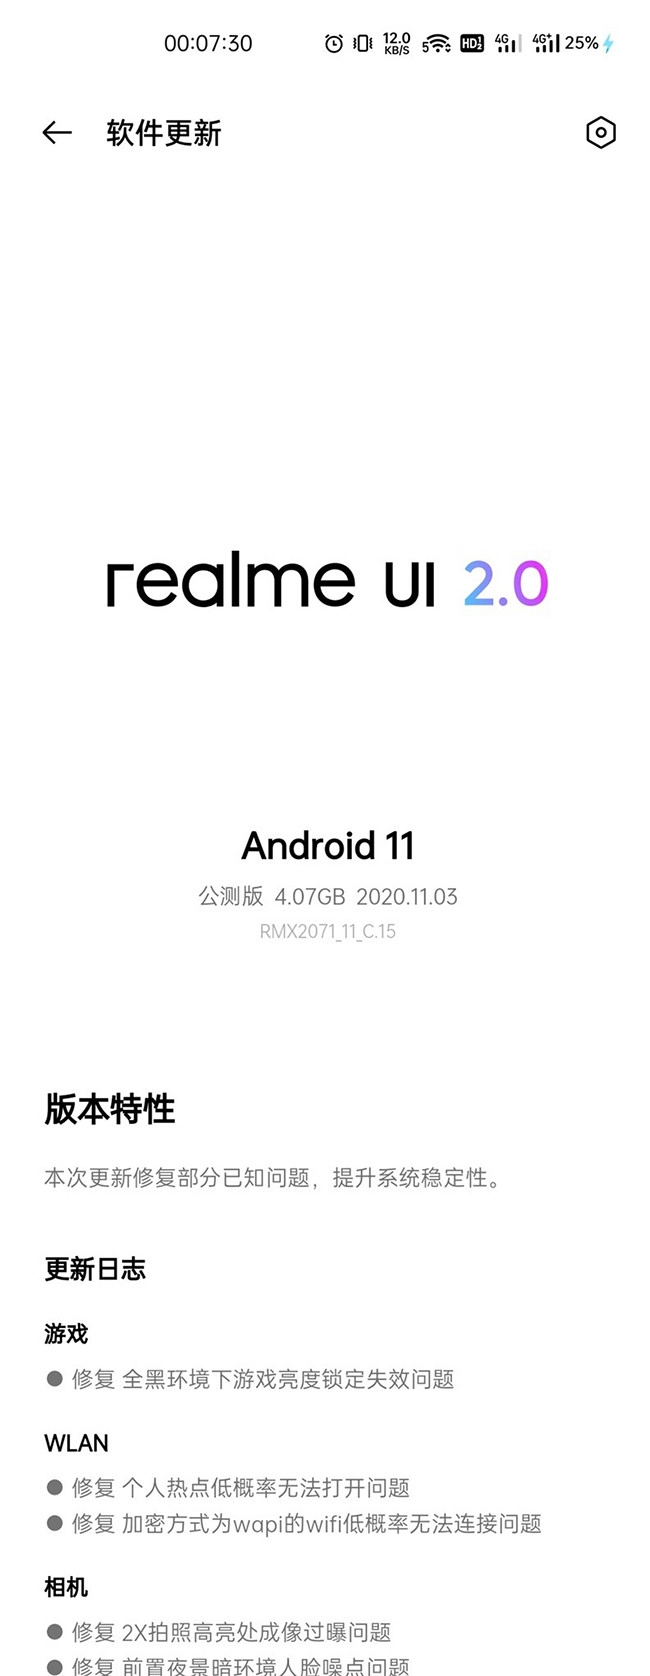 realme-ui-2-0-public-beta-china-x50-pro-1